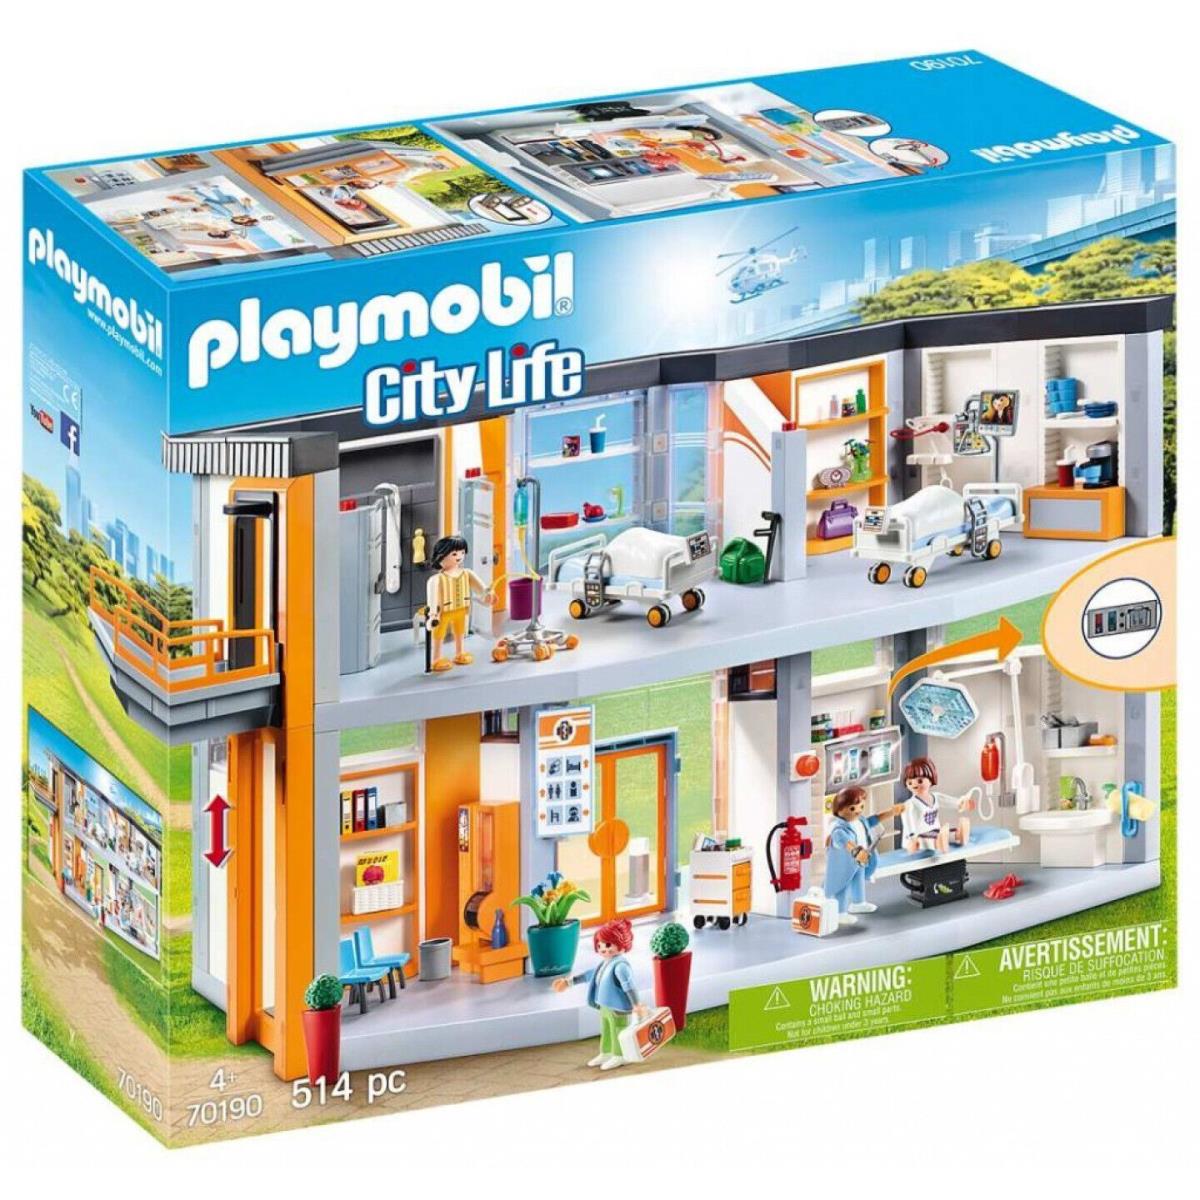 Playmobil City Life Large Hospital - 70190 Building Kit